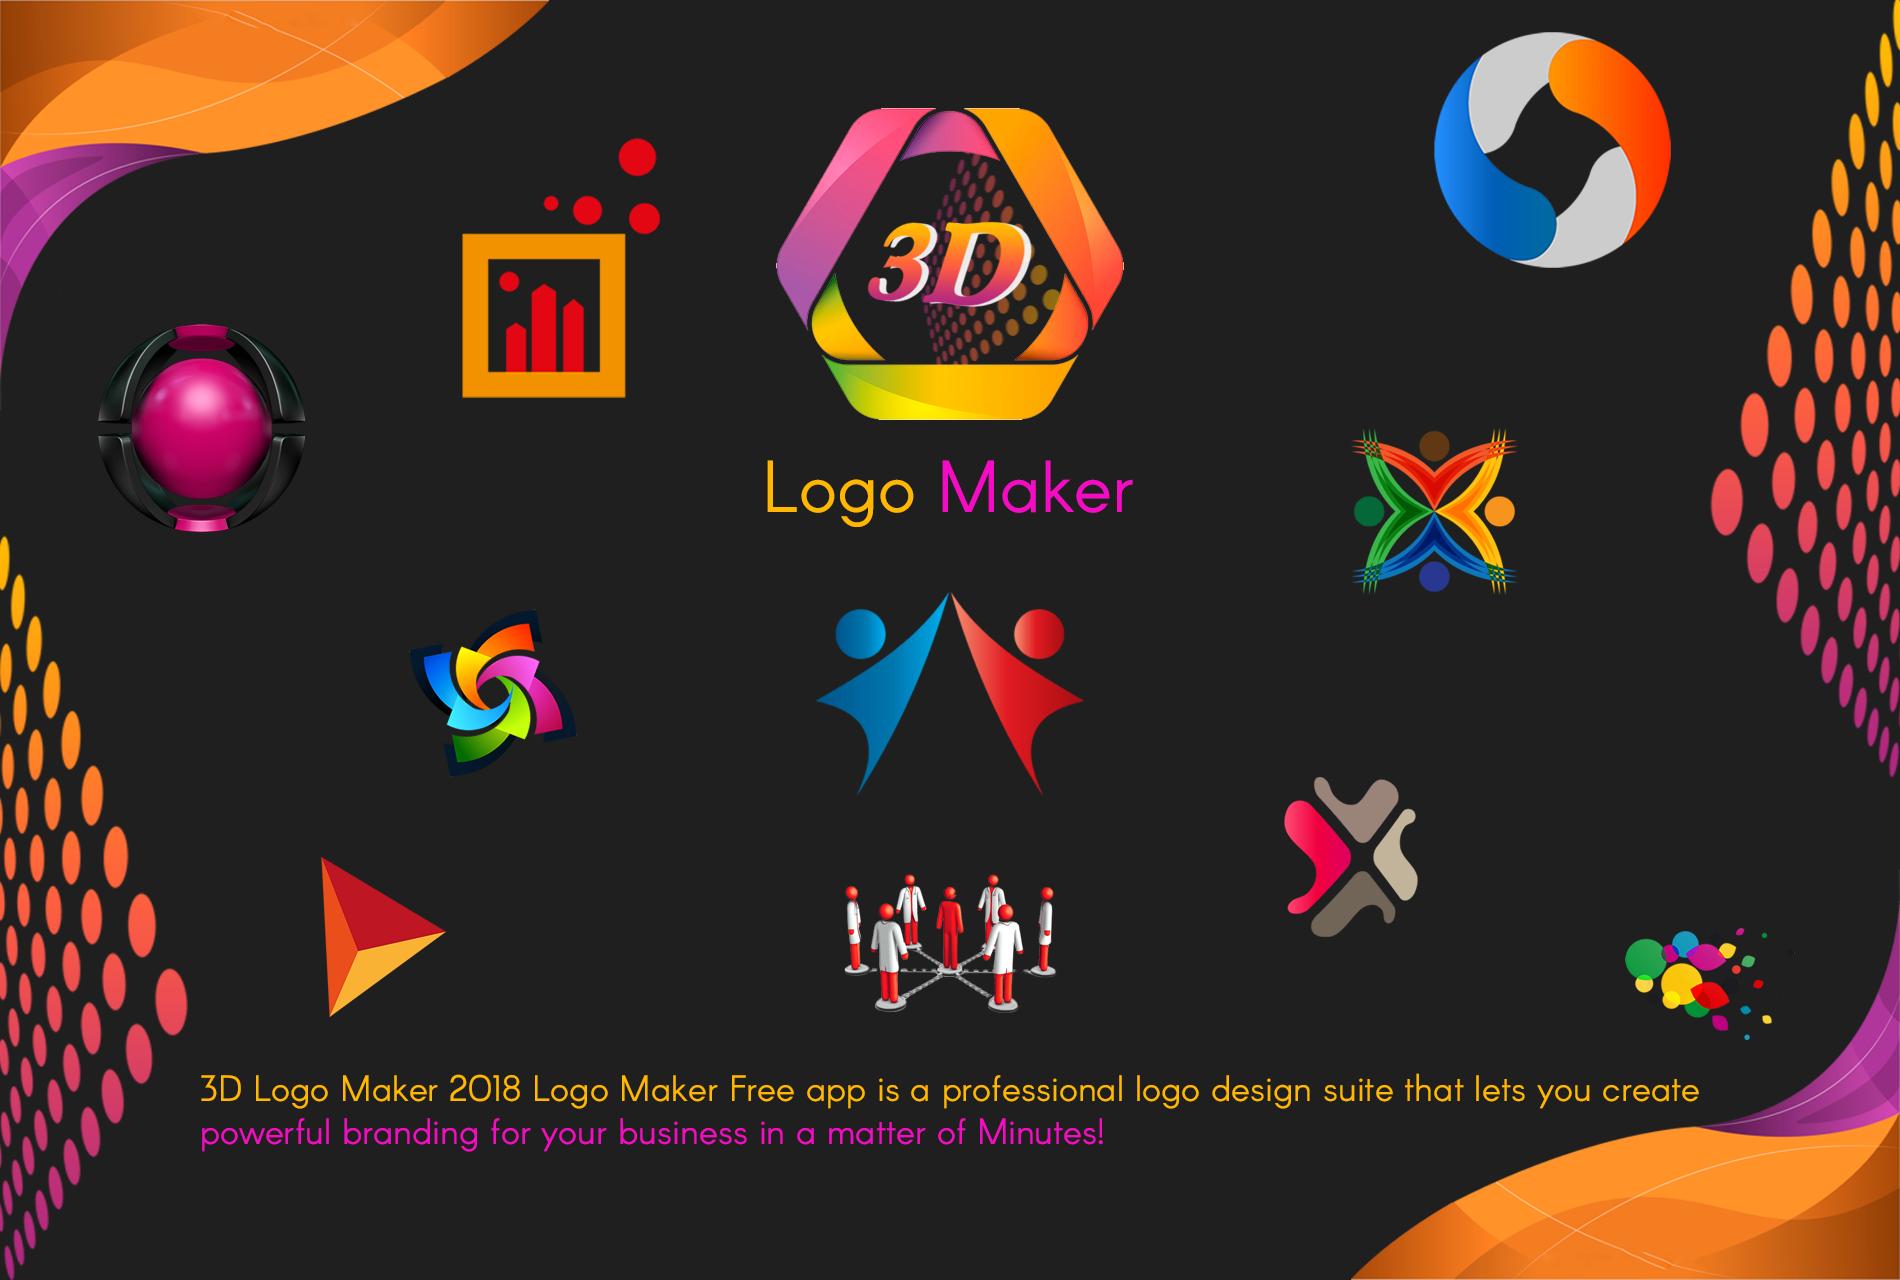 3D Logo Maker for Android - APK Download